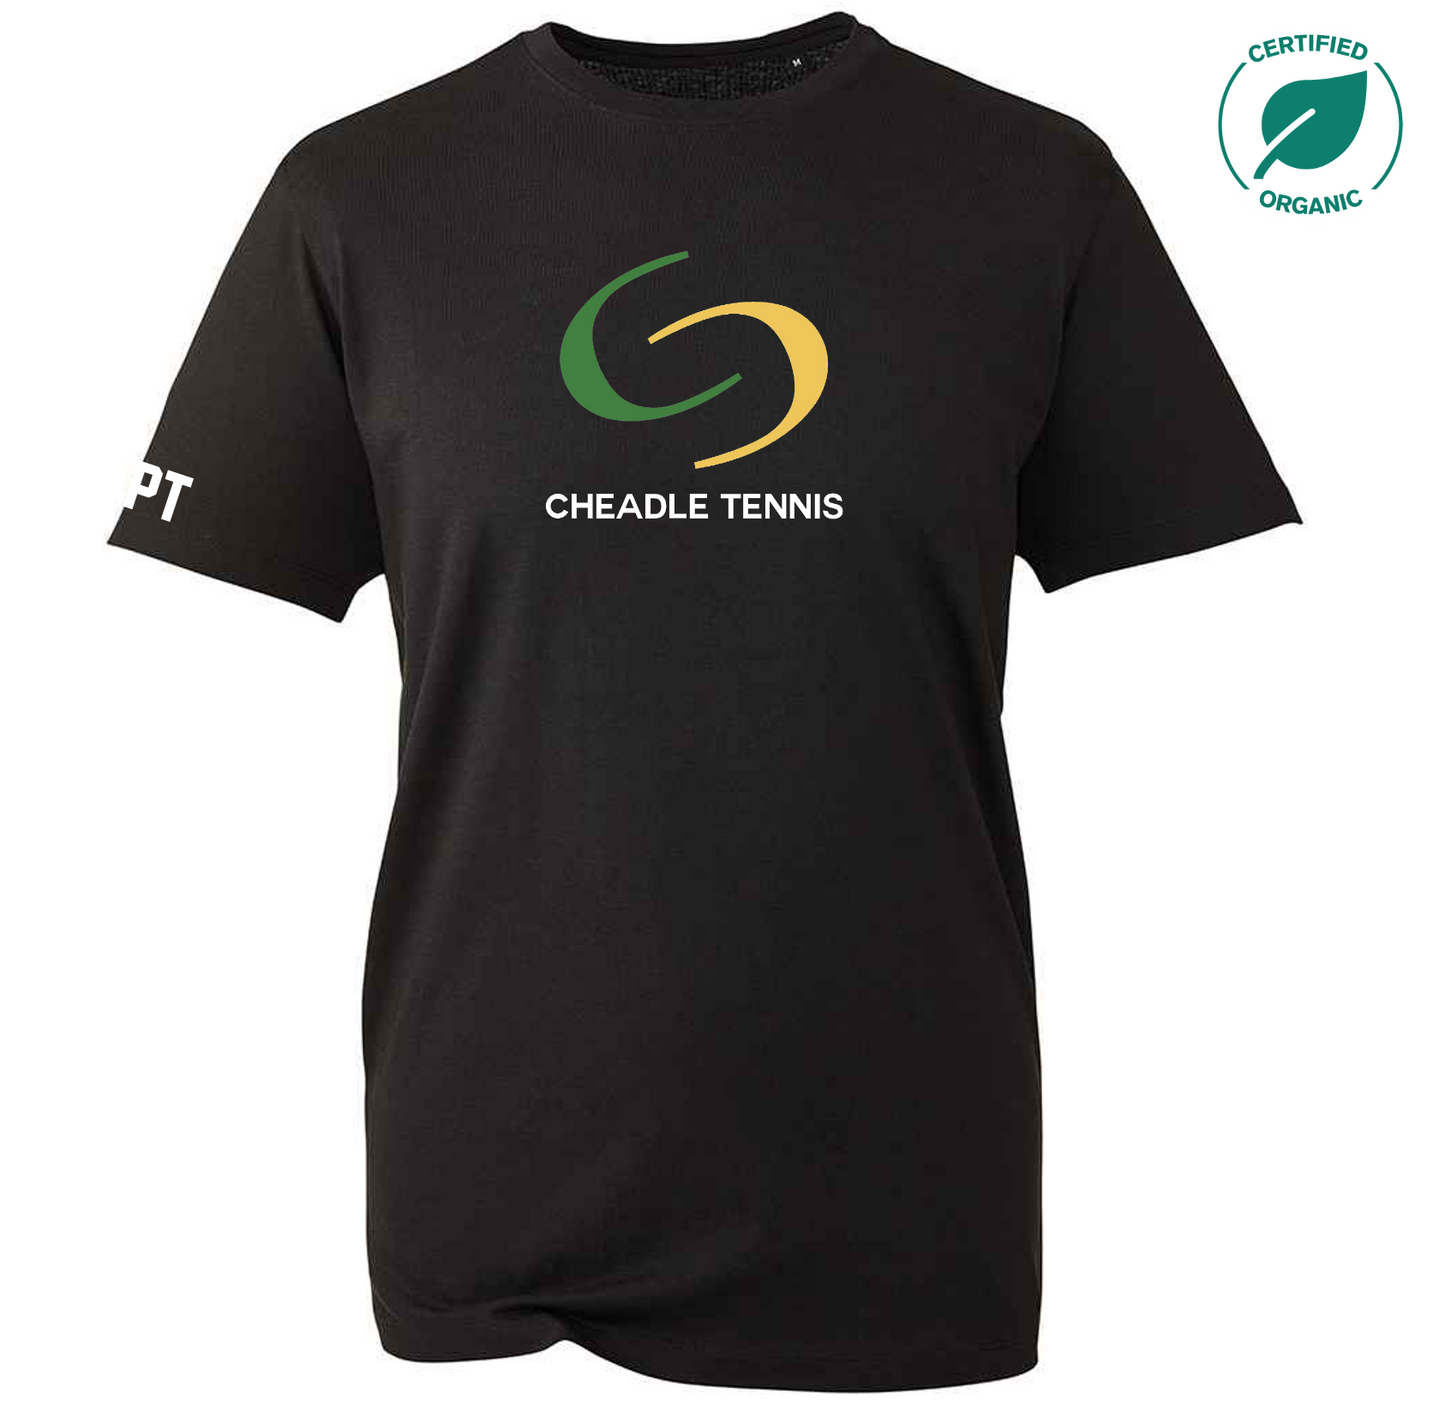 Cheadle Tennis Organic Cotton T-Shirt